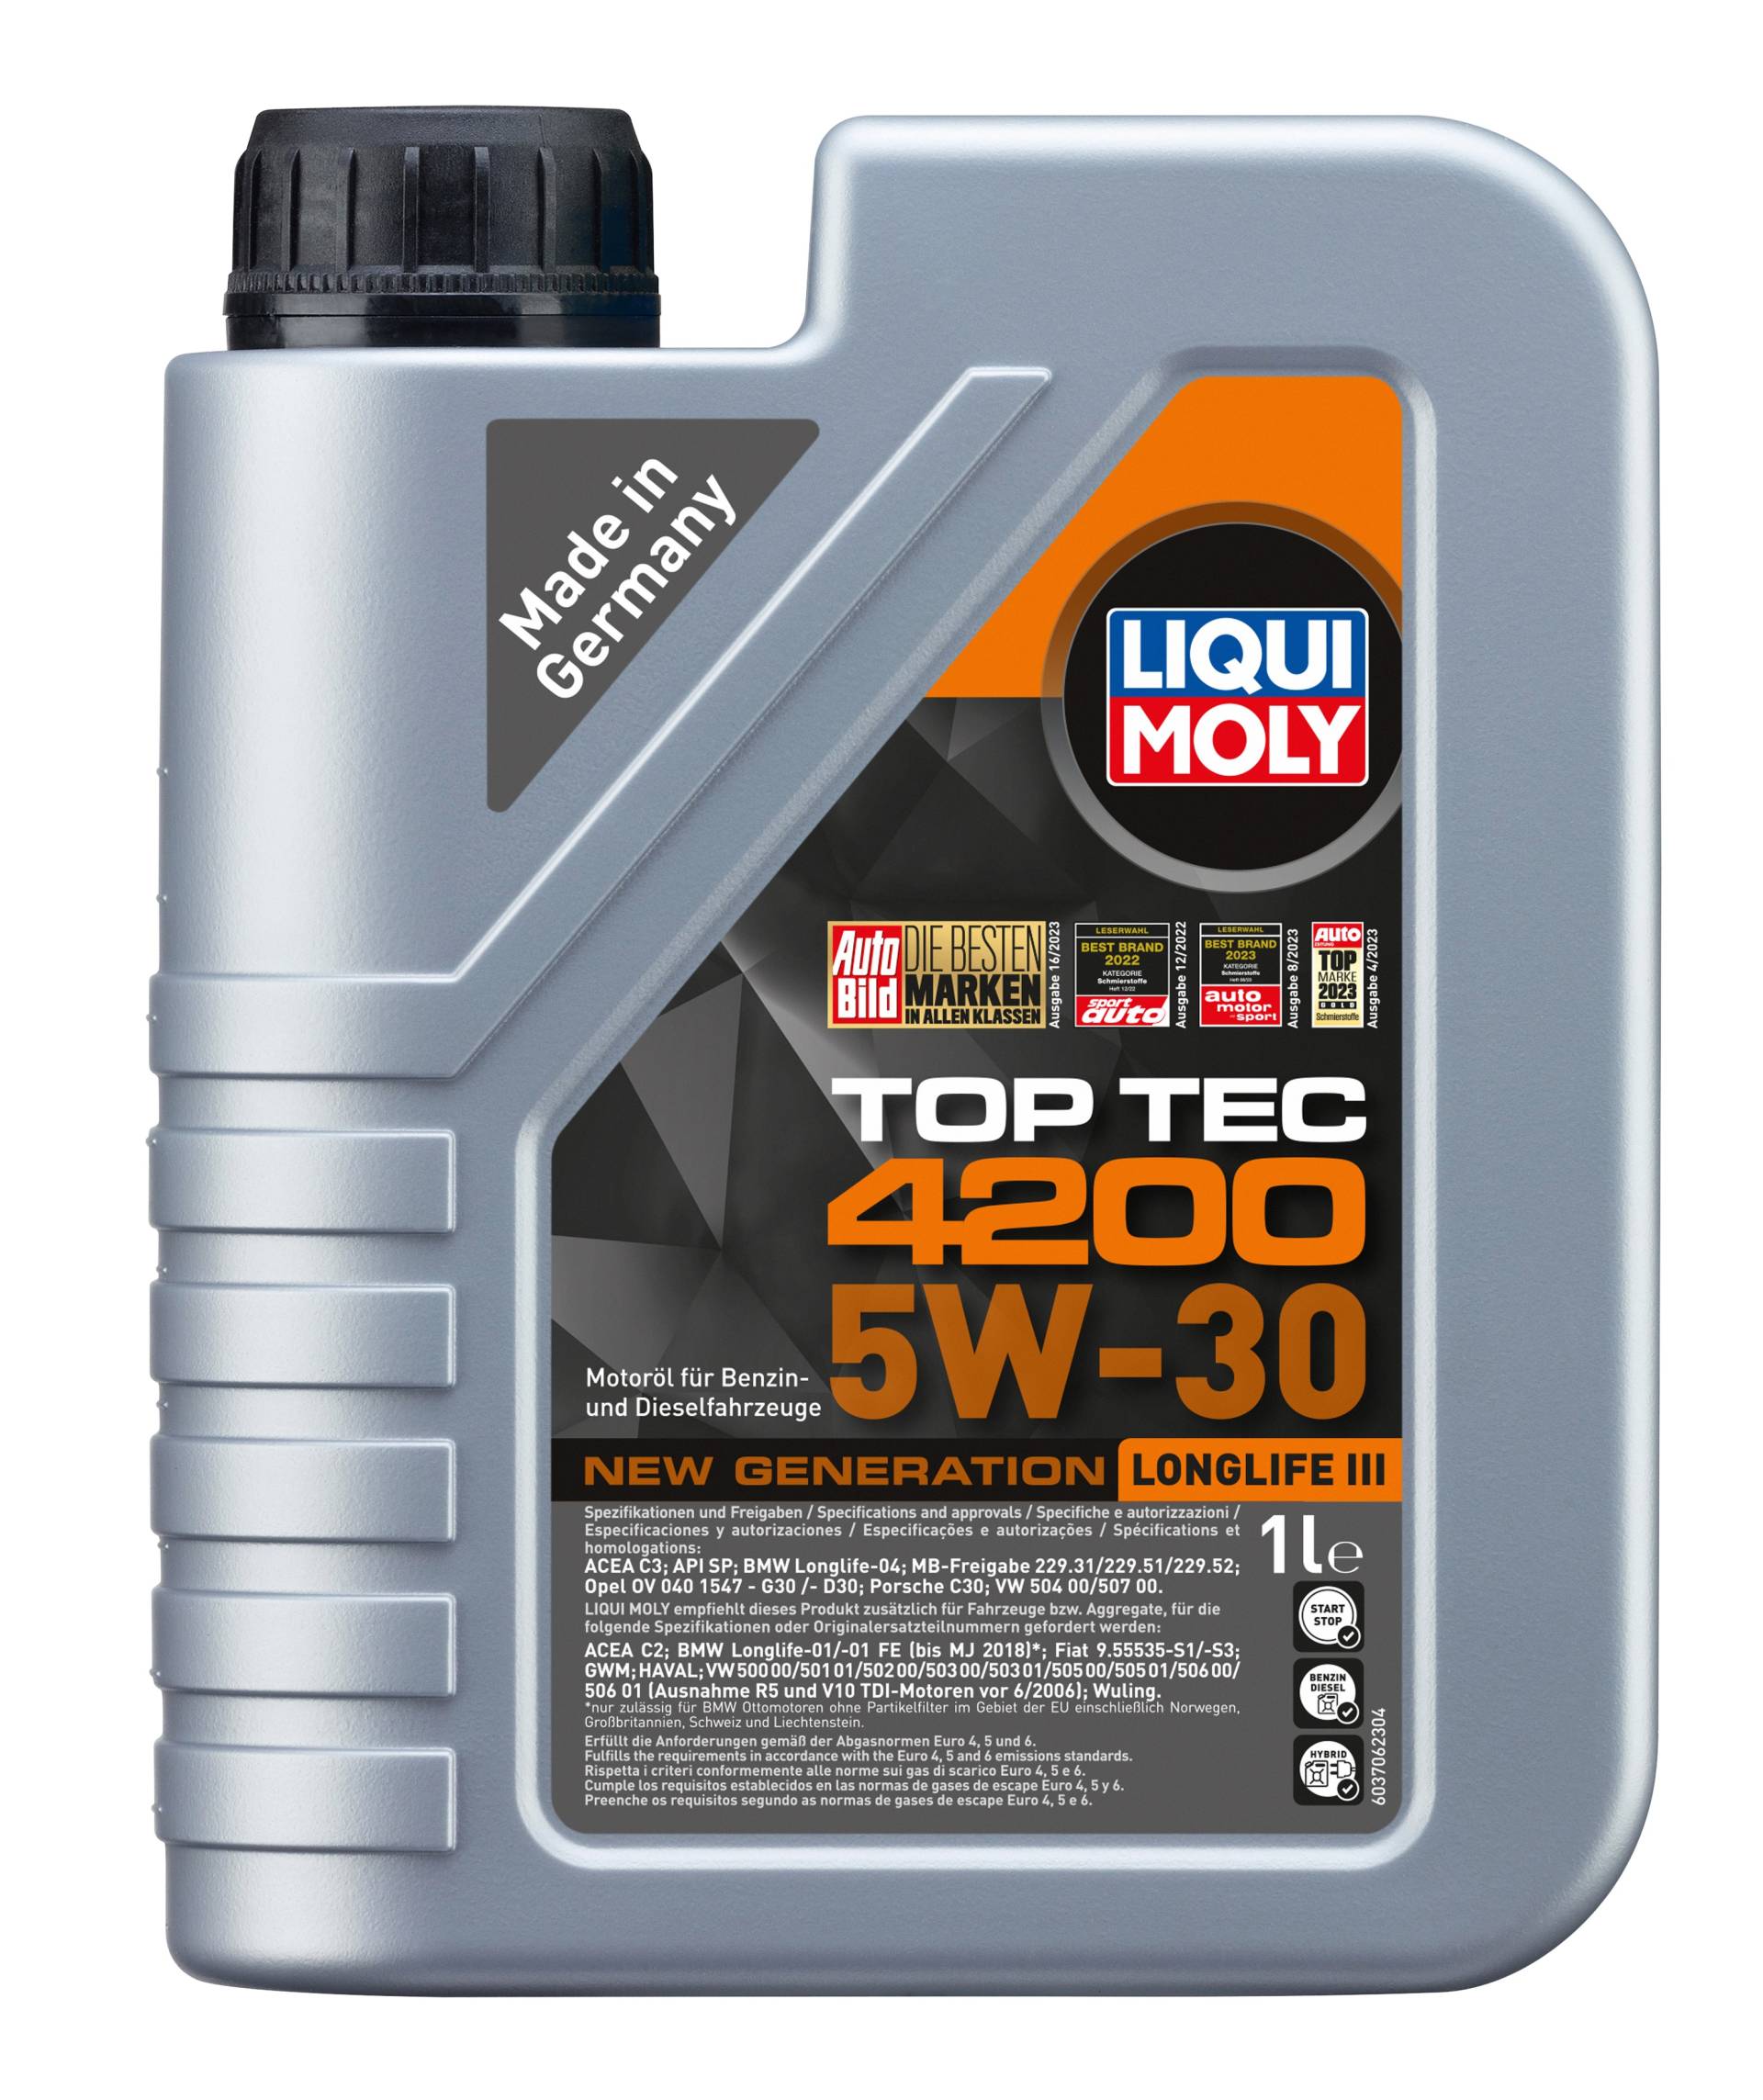 Liqui Moly TopTec 4200 5W-30 Motoröl, 1 Liter von Liqui Moly